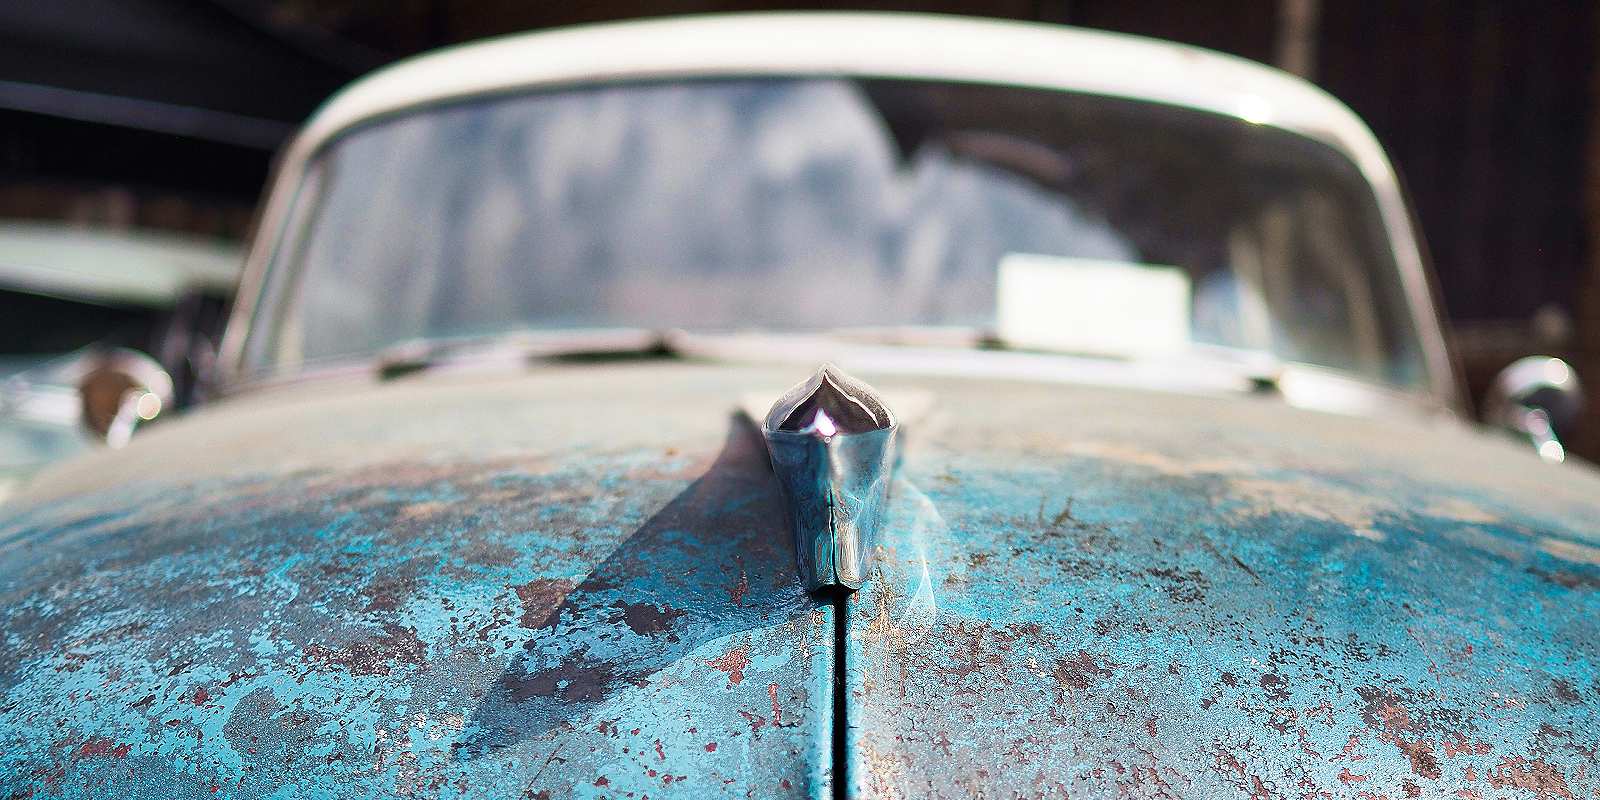 Rust repairs on cars фото 26